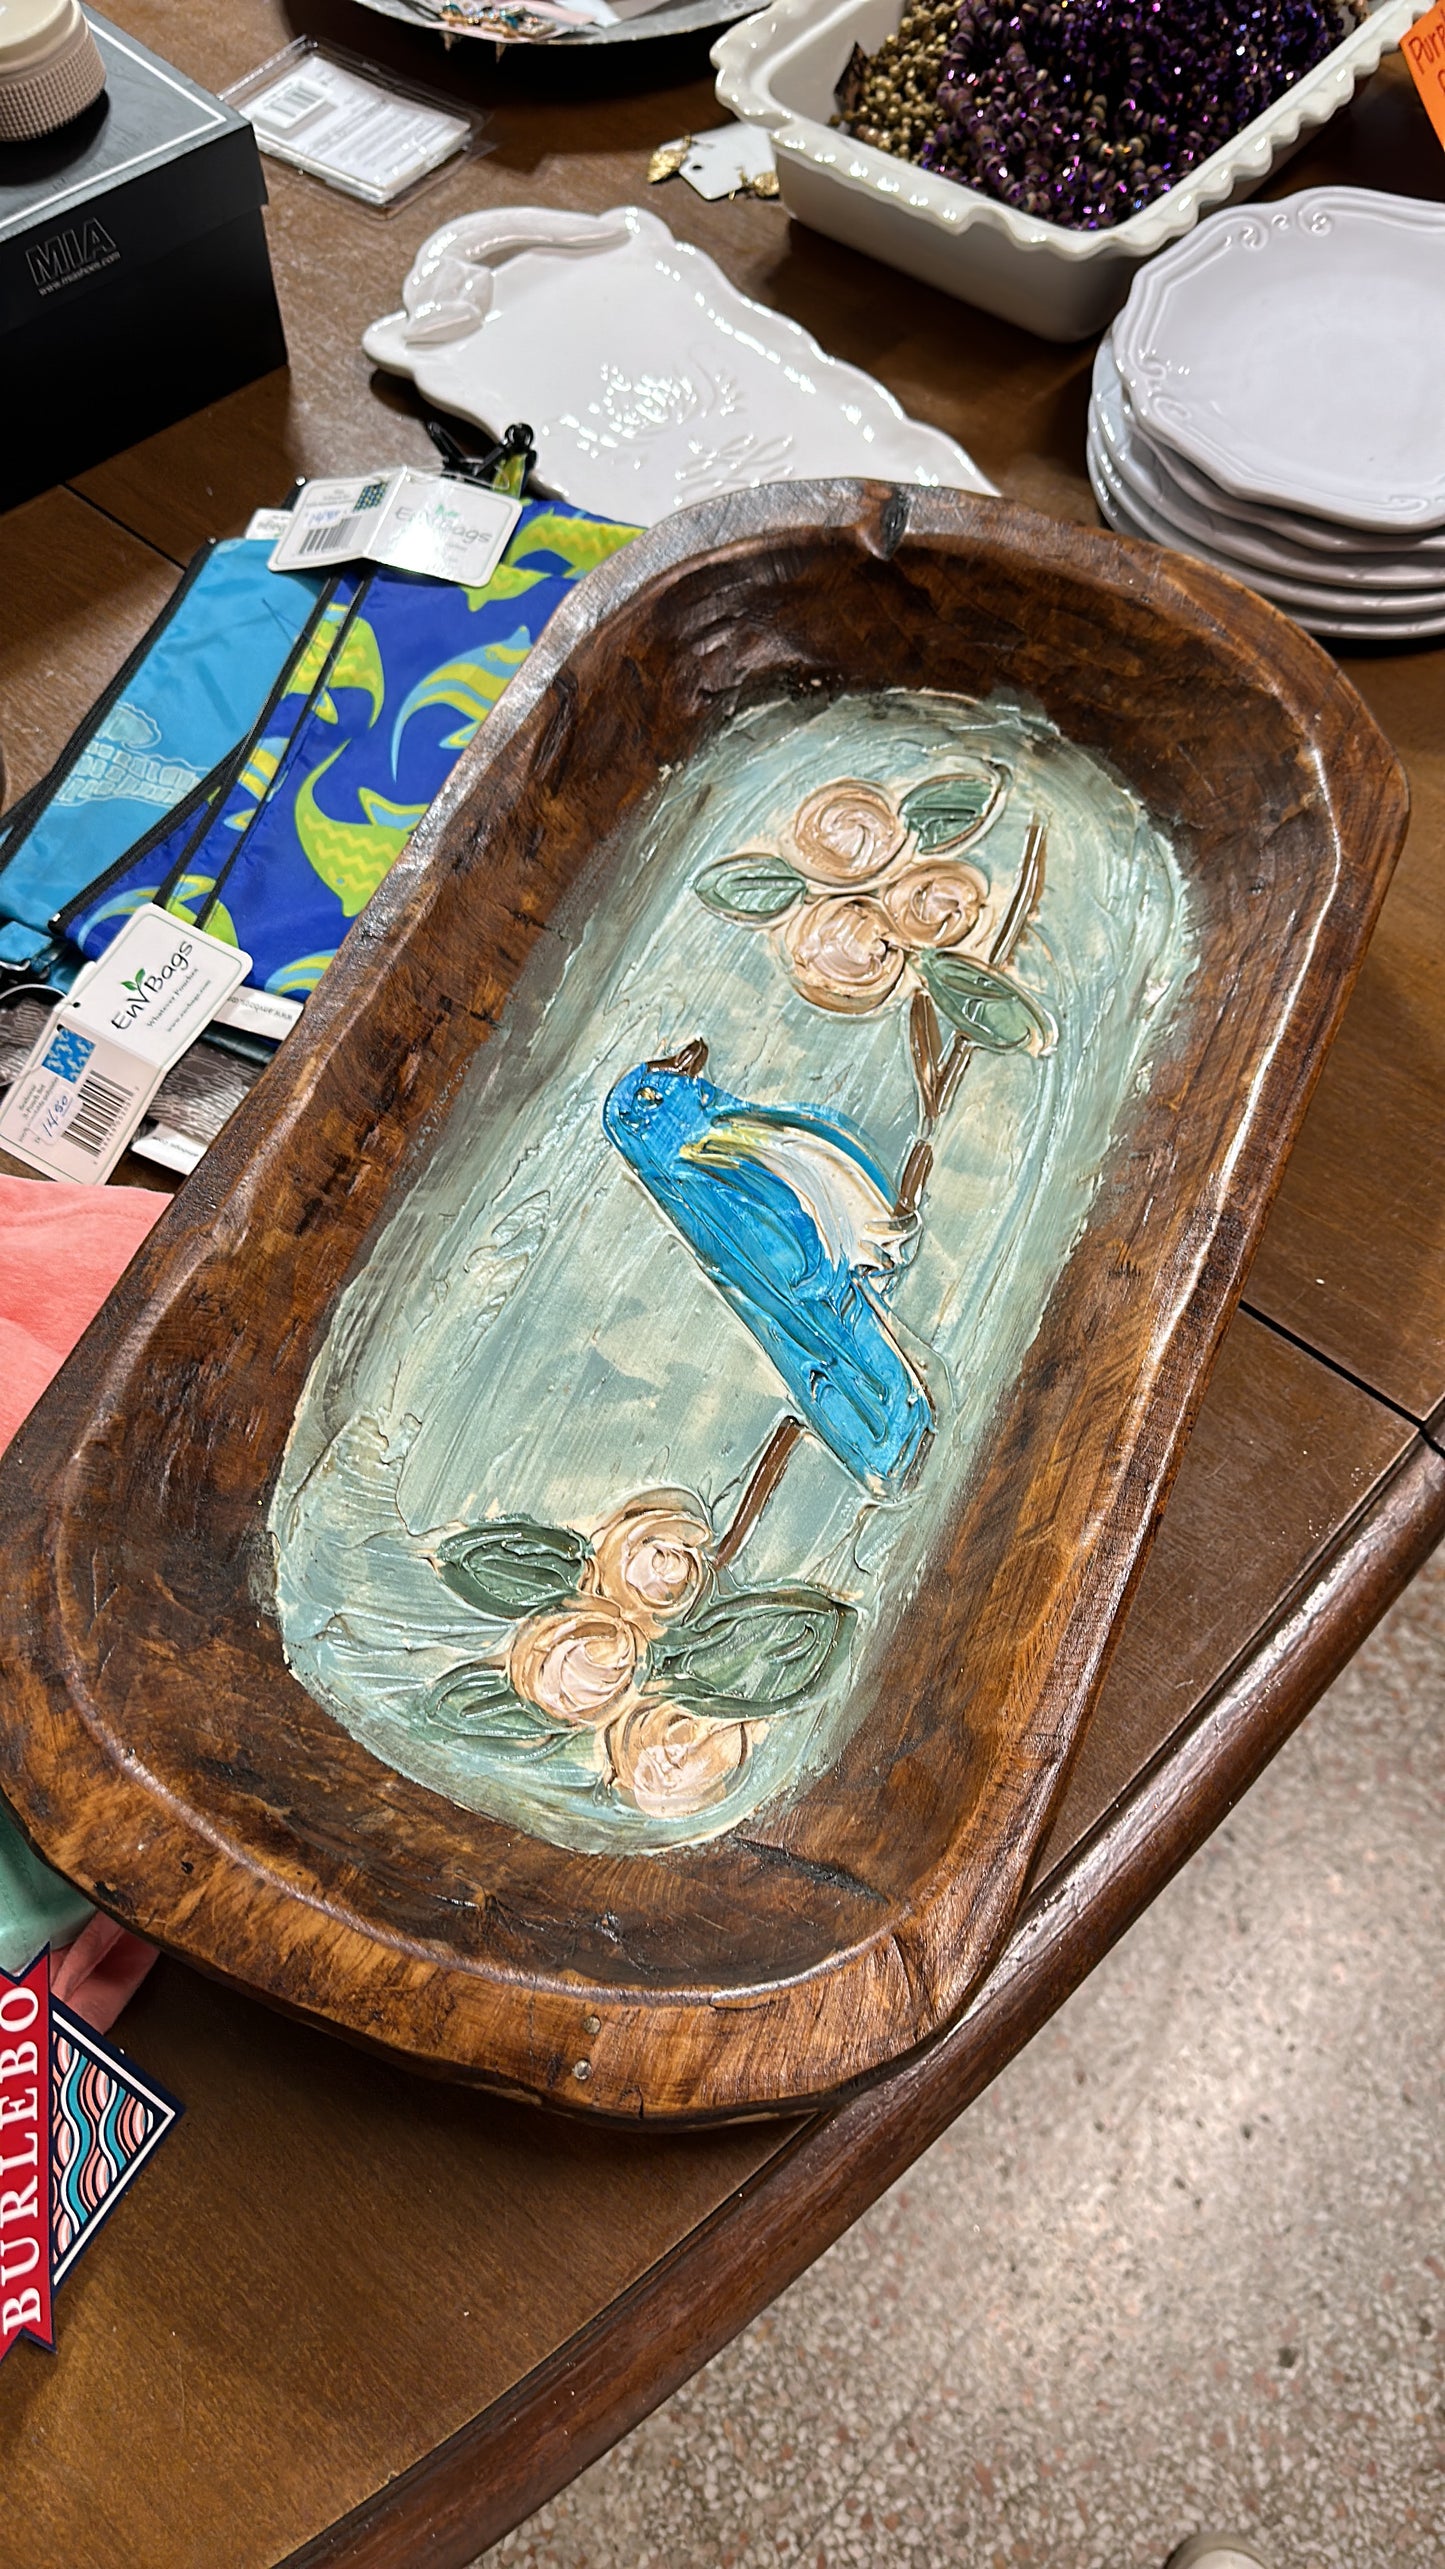 Painted Bird on Dough Bowl